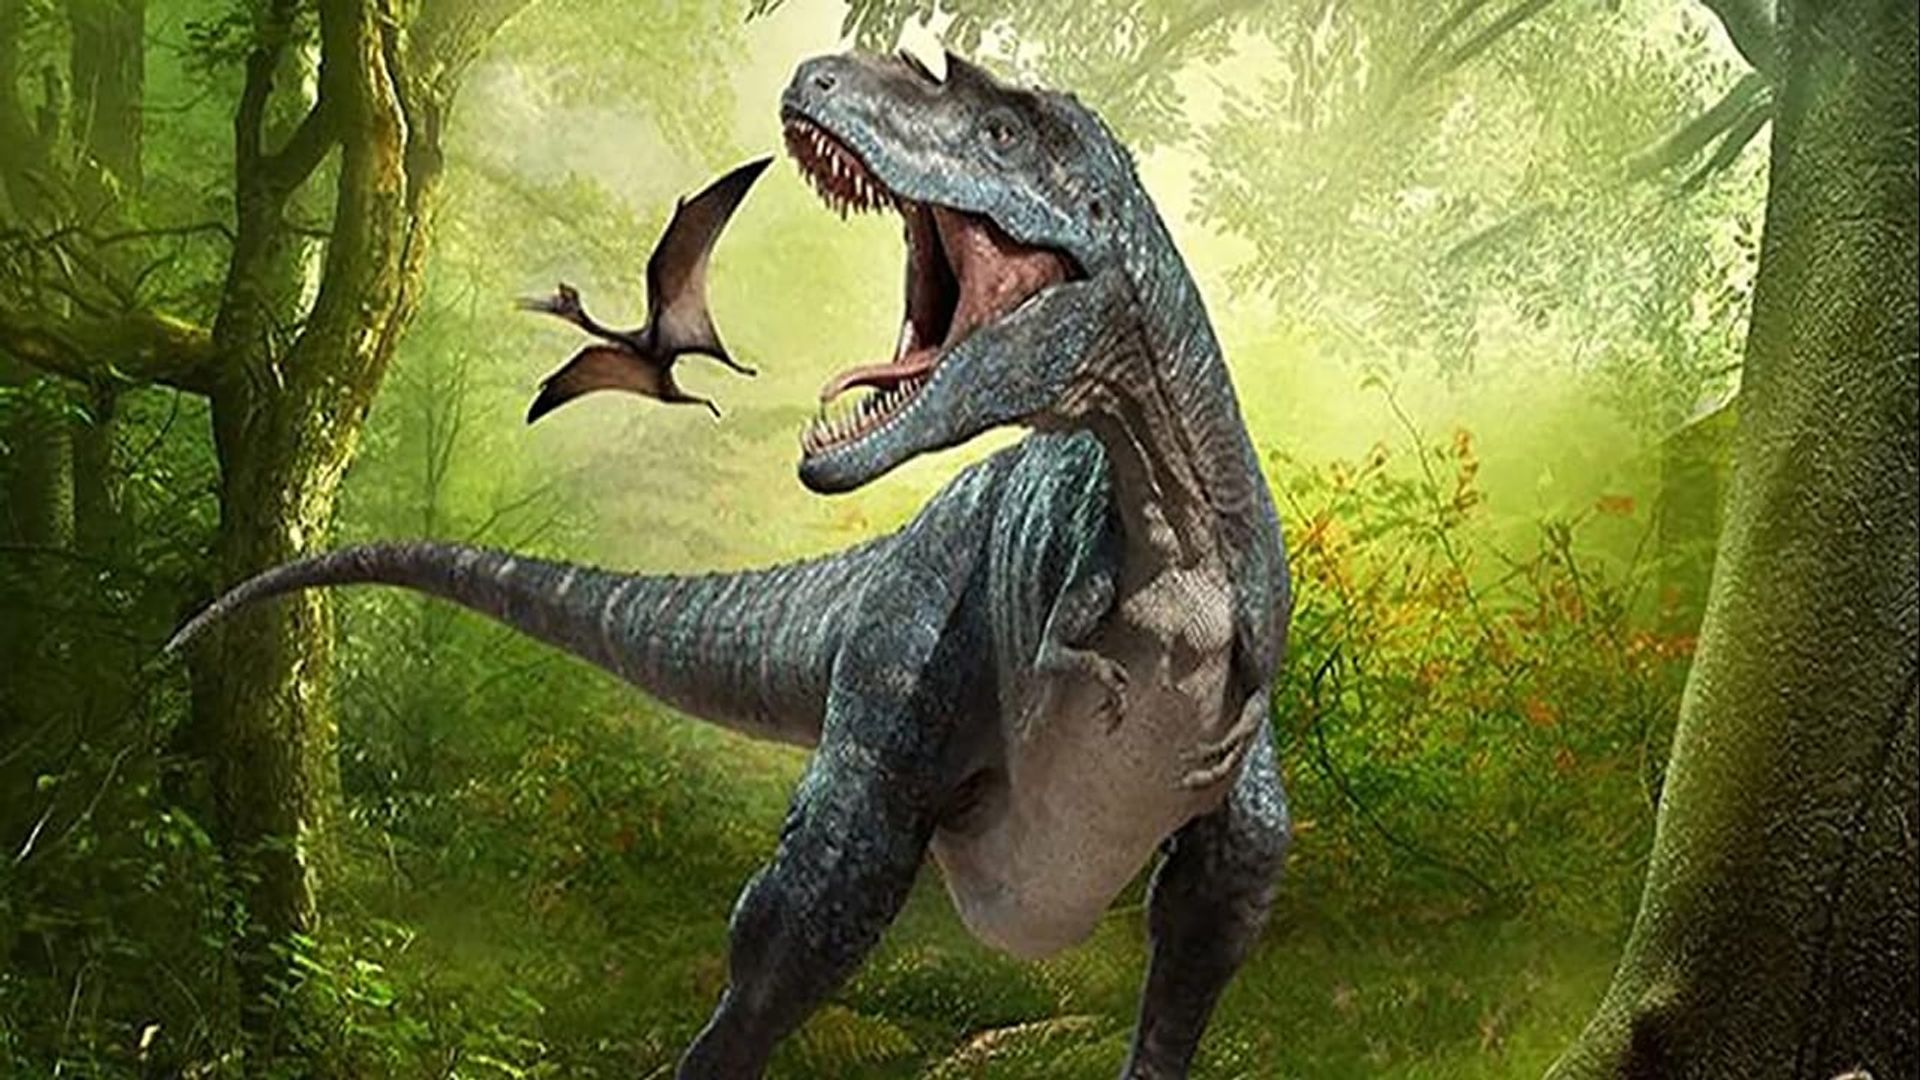 The Dinosaur Hunters background